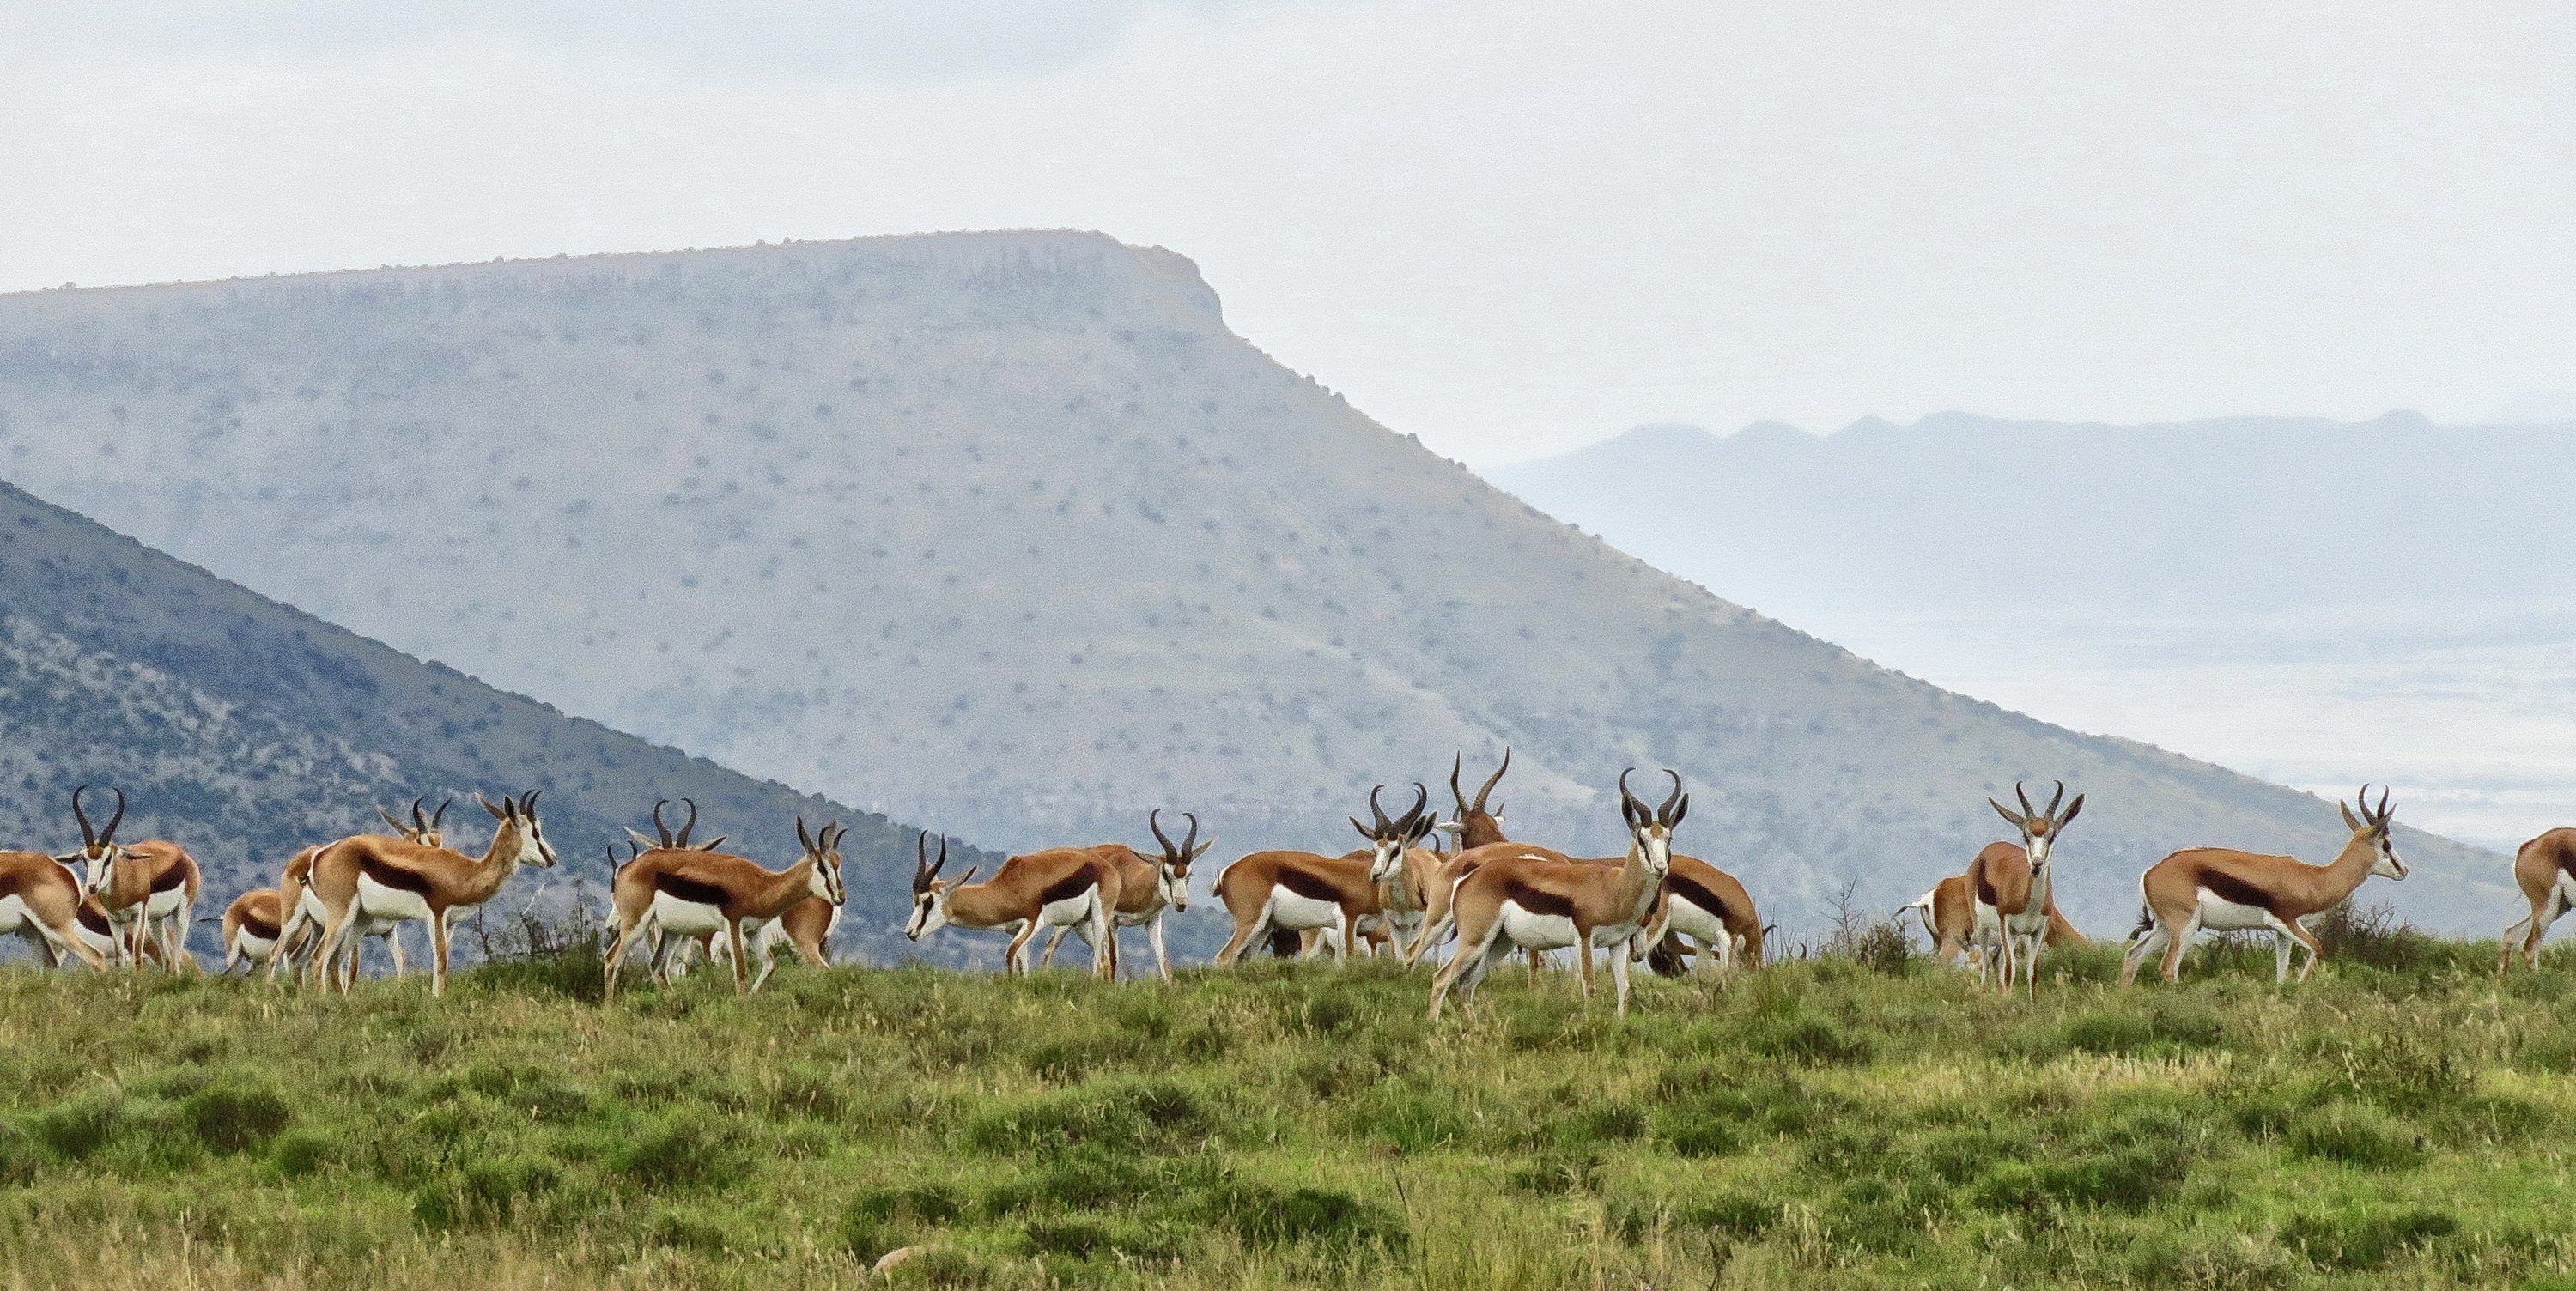 Springbok graze before the distinctive Spekboomberge in in the Mountain Zebra National Park near Cradock. Image: Chris Marais